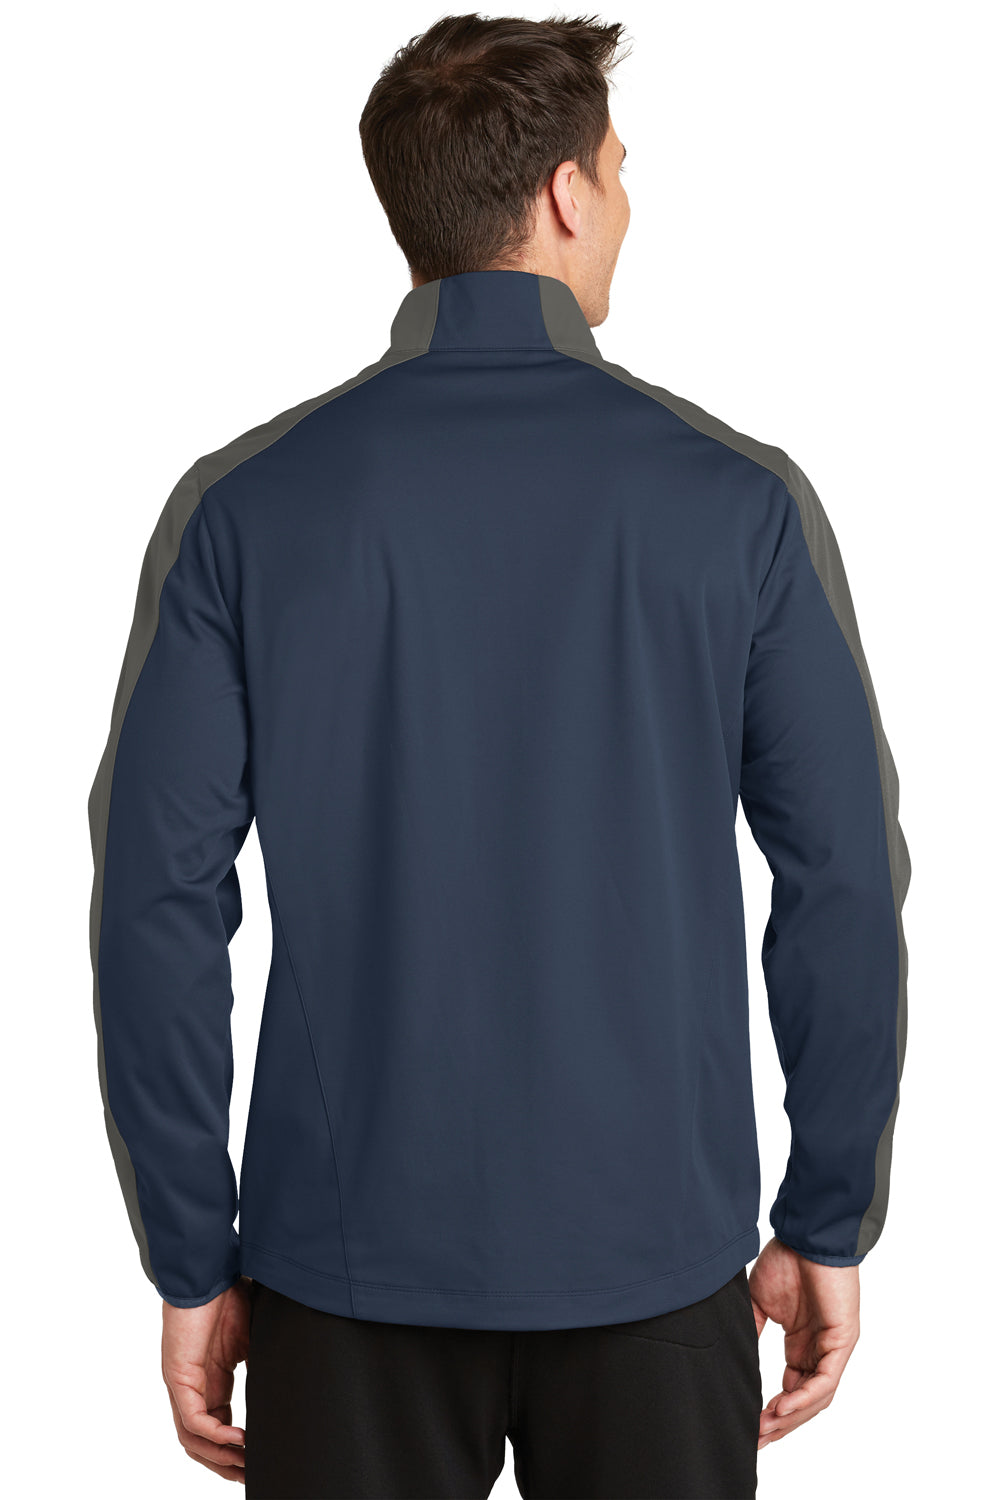 Port Authority J718 Mens Active Wind & Water Resistant Full Zip Jacket Navy Blue/Grey Back